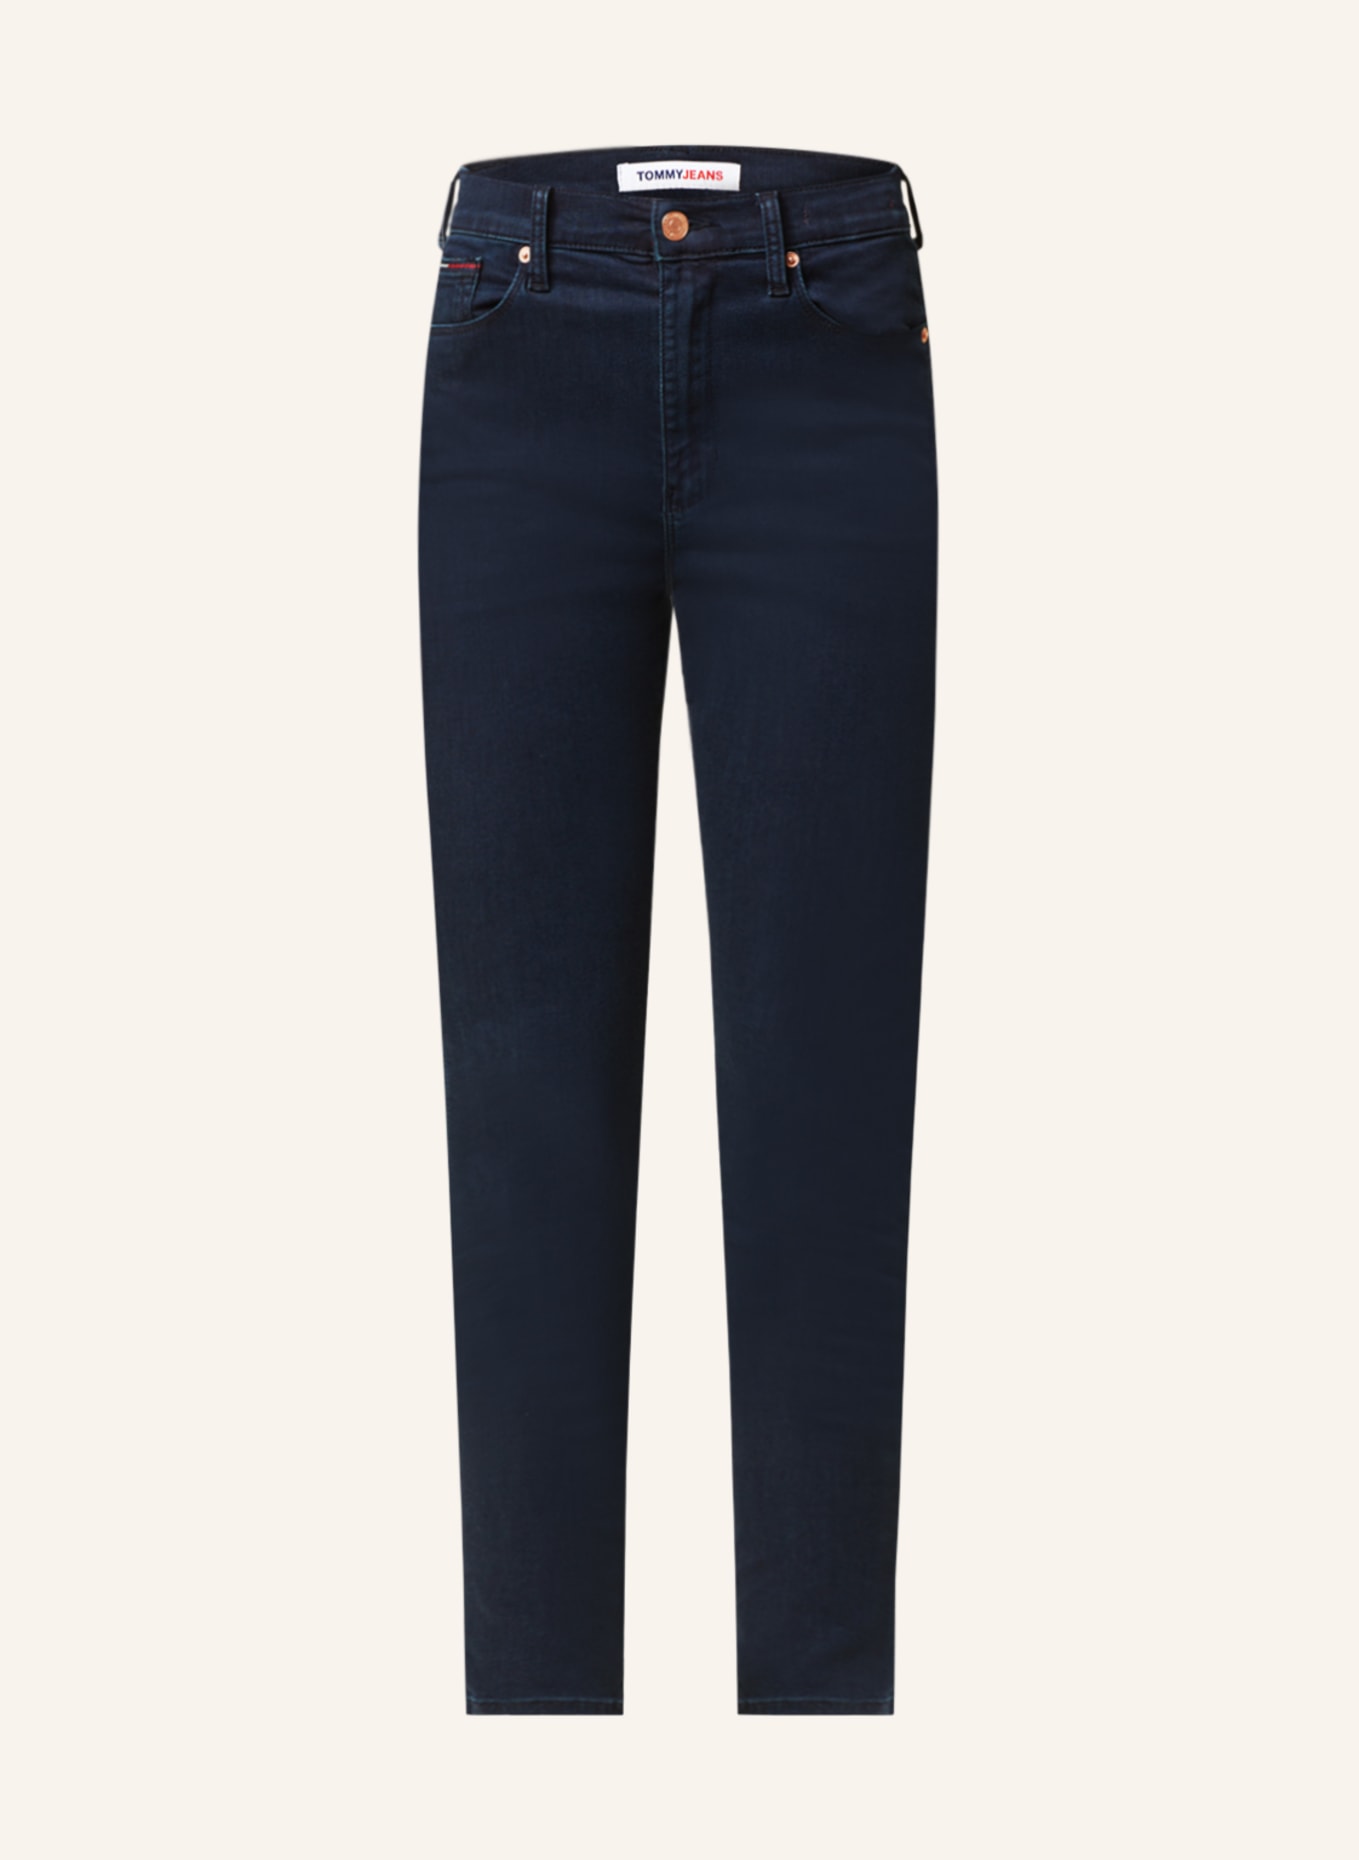 TOMMY JEANS Skinny Jeans SYLVIA, Farbe: 1BK Avenue Dark Blue Stretch (Bild 1)